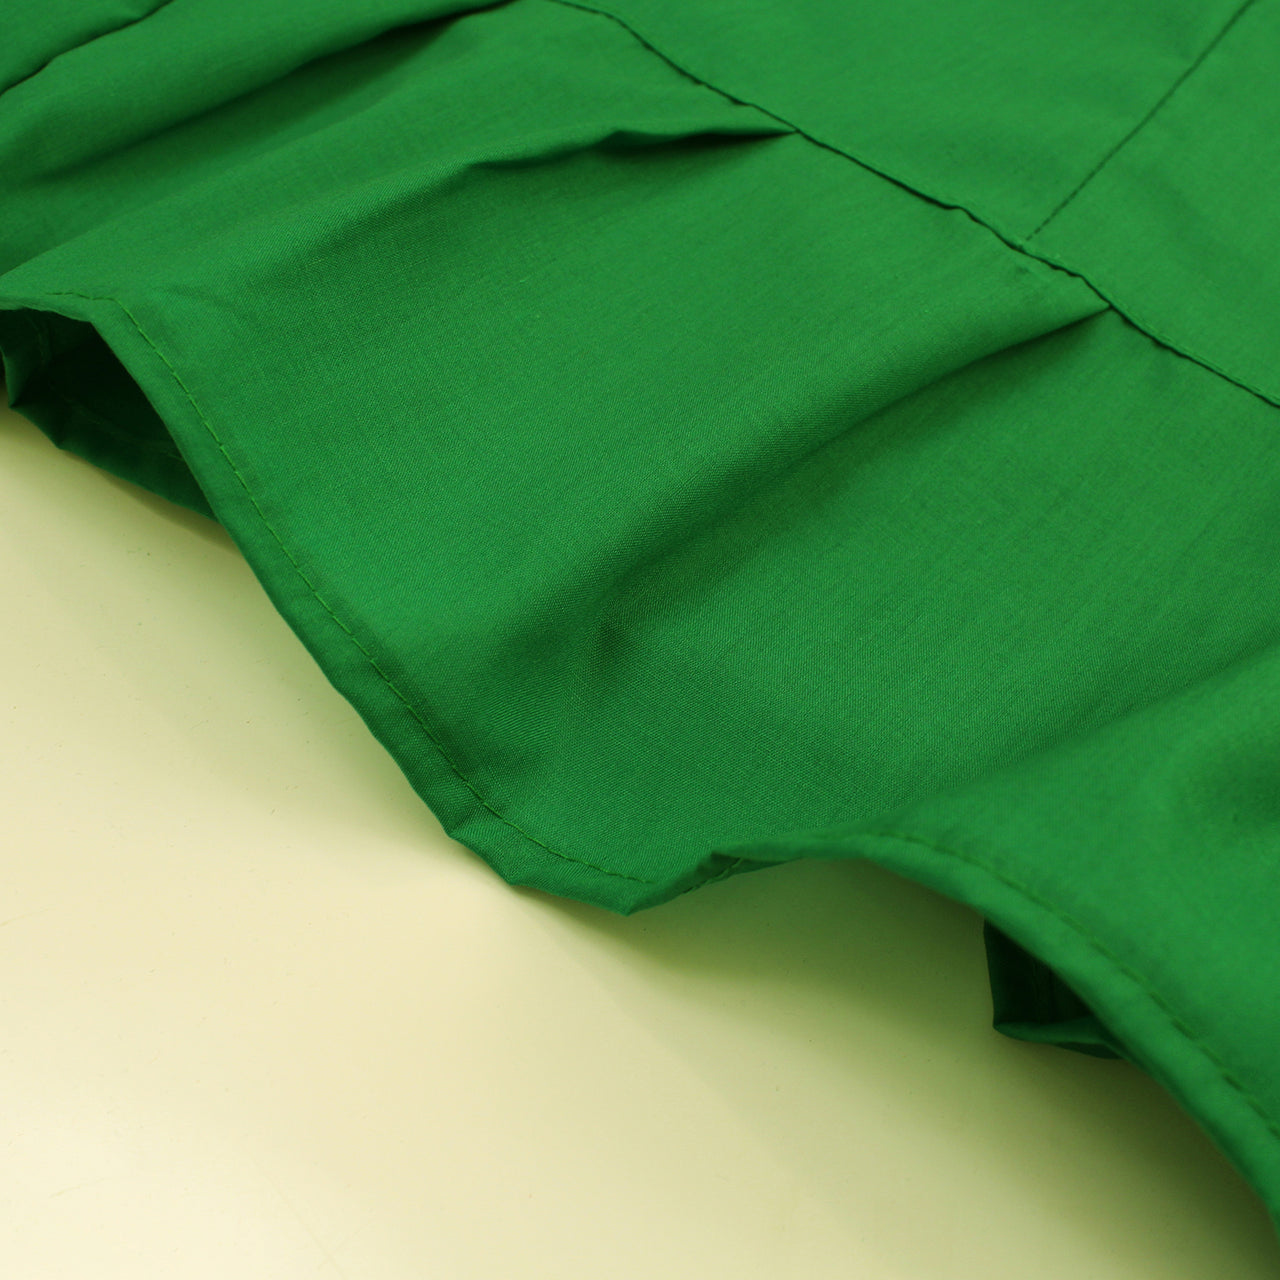 Emerald Green - Sari (Saree) Petticoat - Available in S, M, L & XL - Underskirts For Sari's